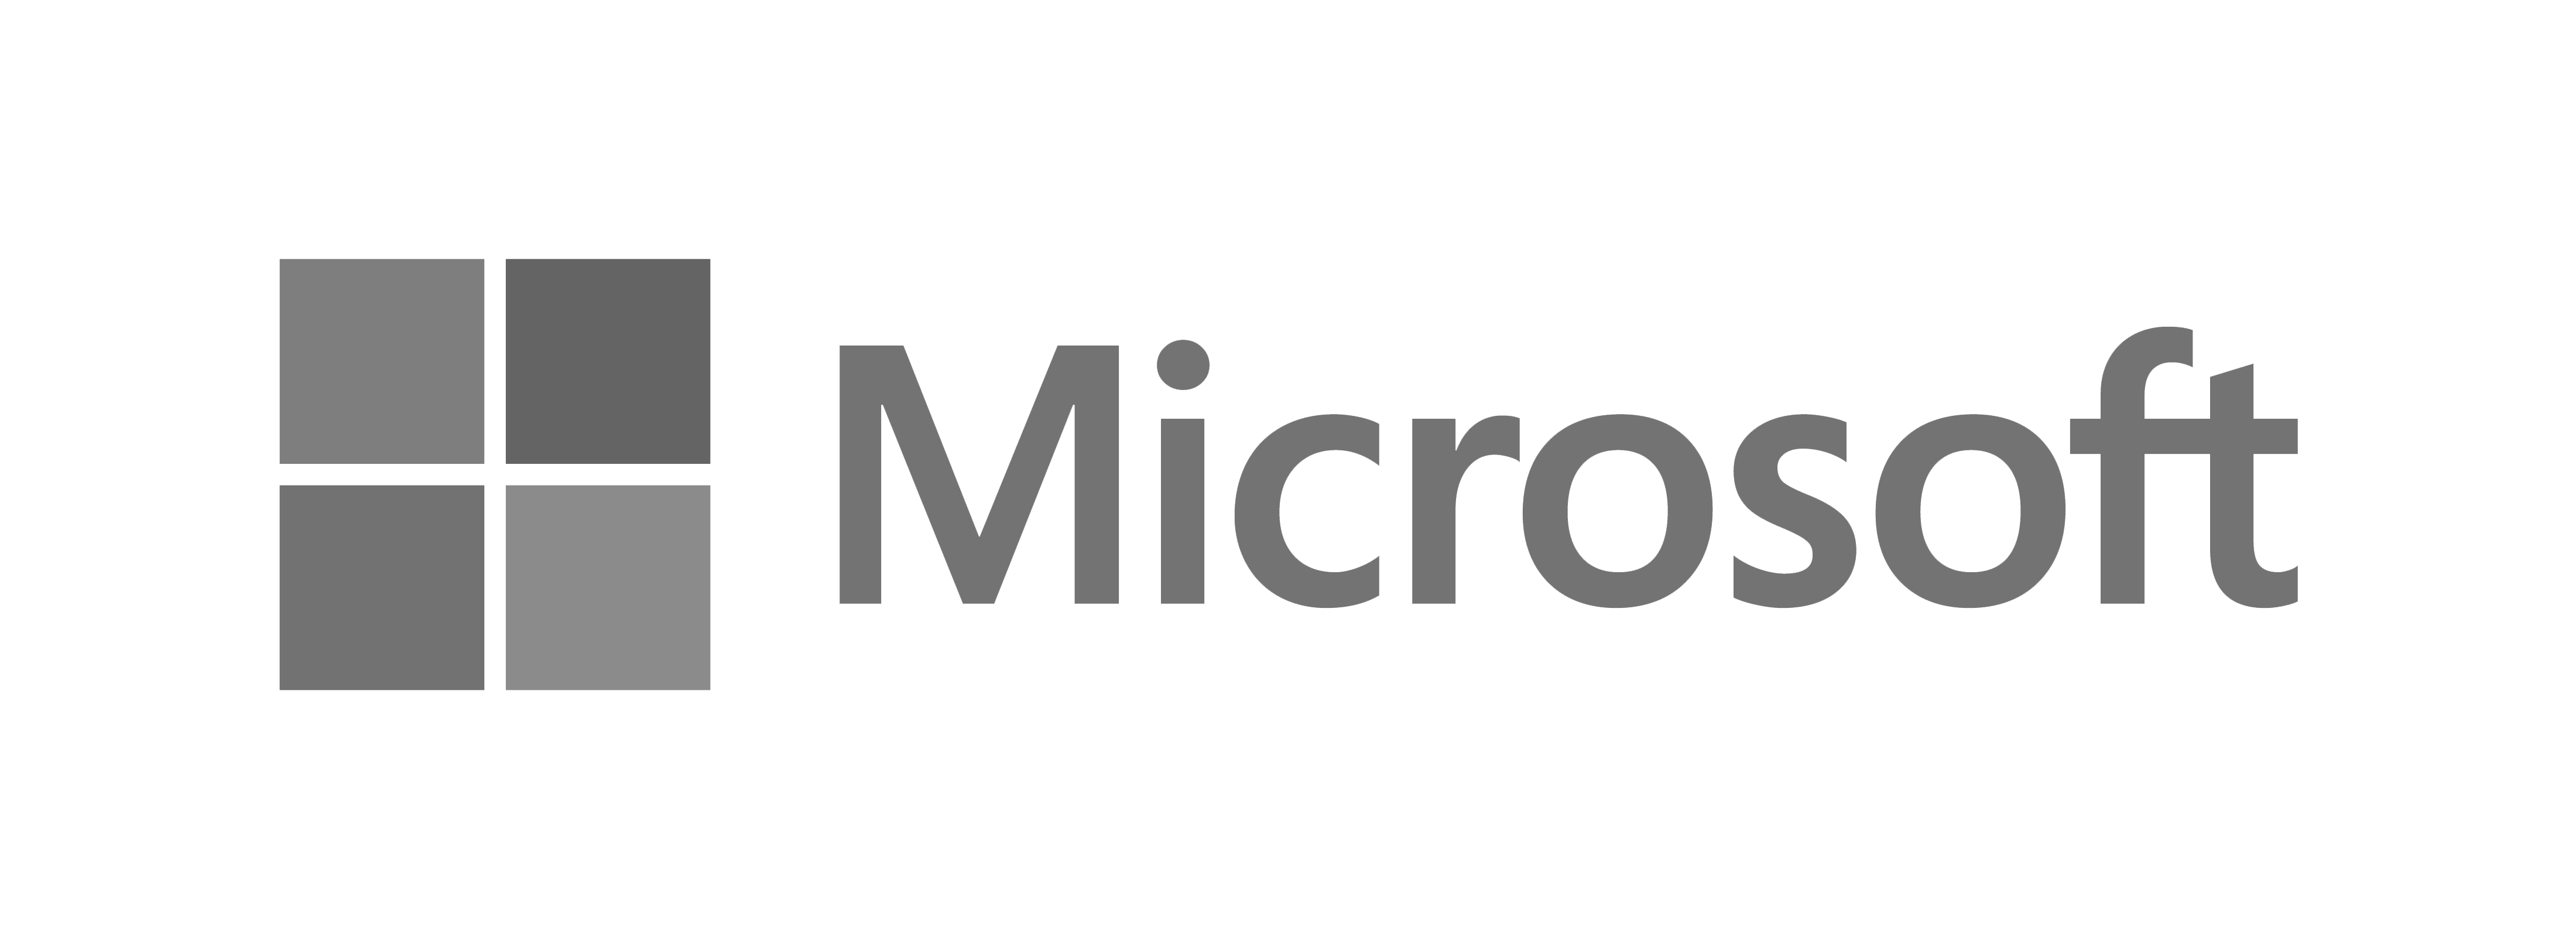 microsoft logo copy